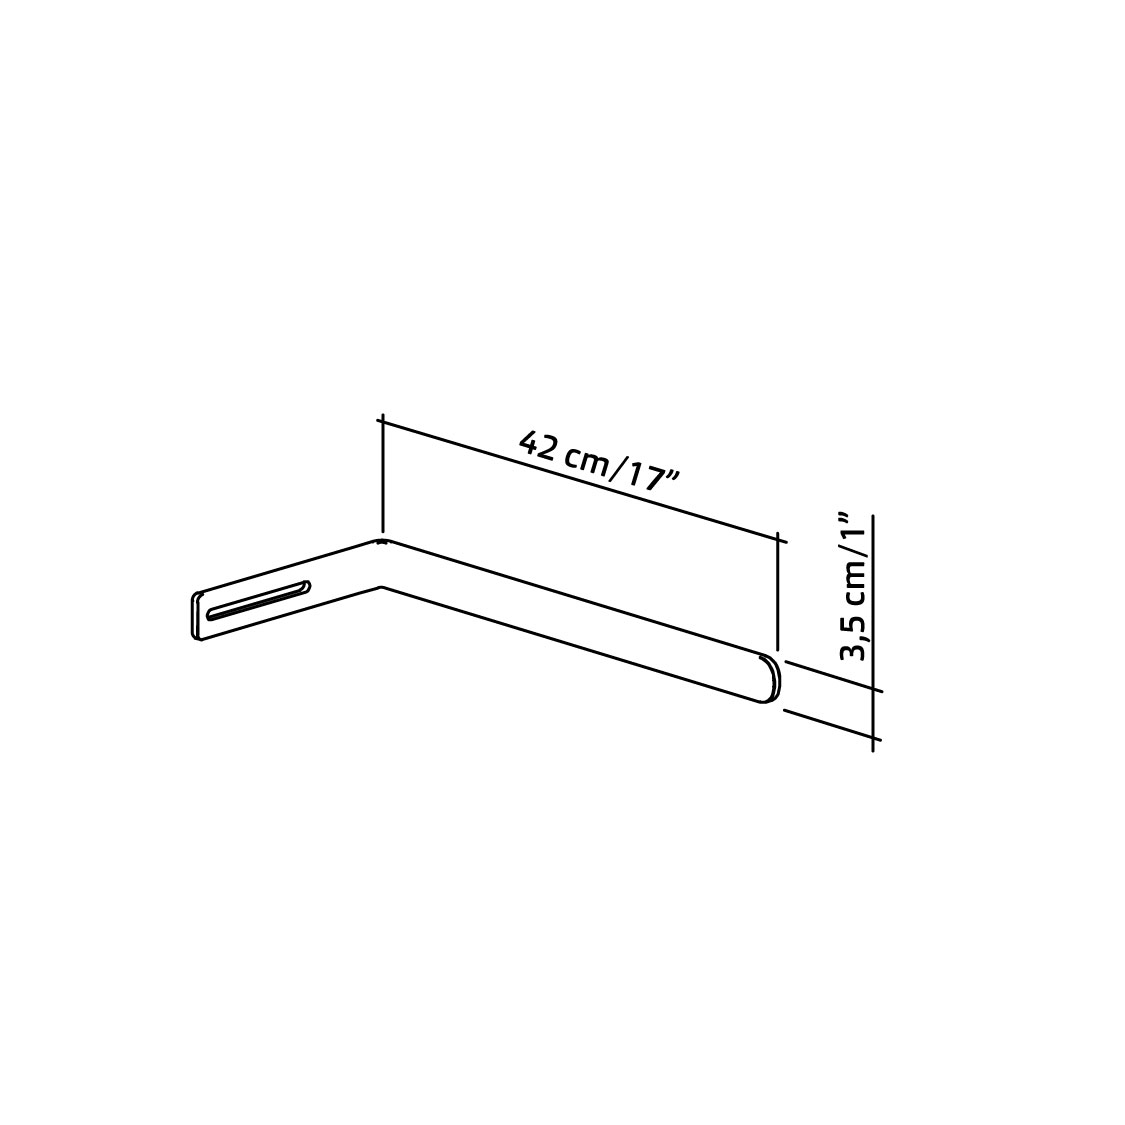 45-701-xx-towel-holder-for-washbasin-bracket-diagram